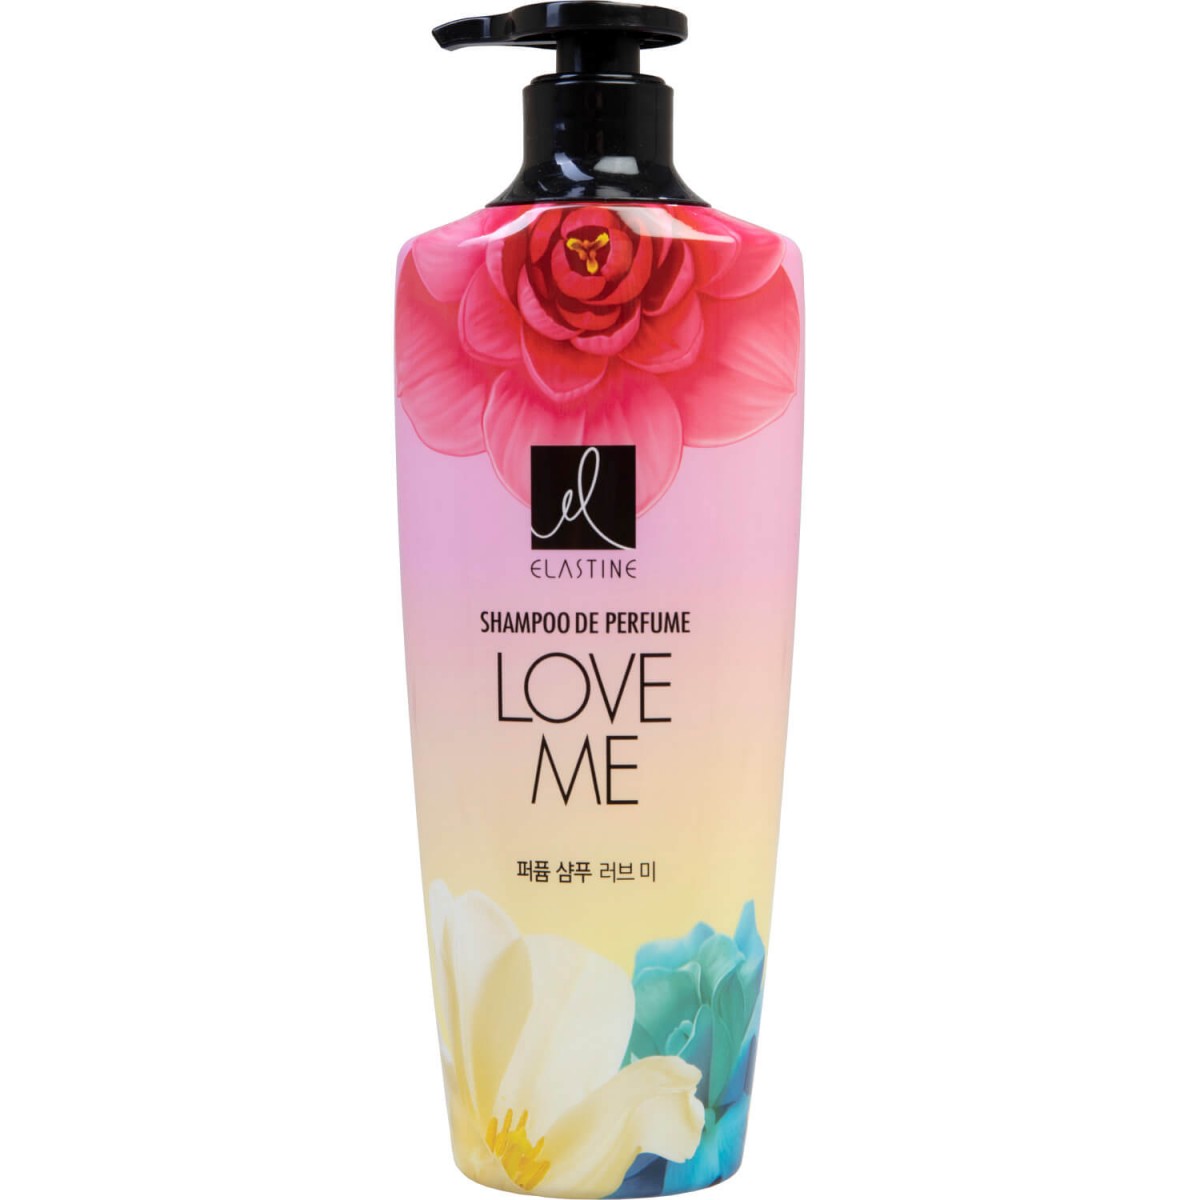 Perfume Love Me Shampoo [Elastine]